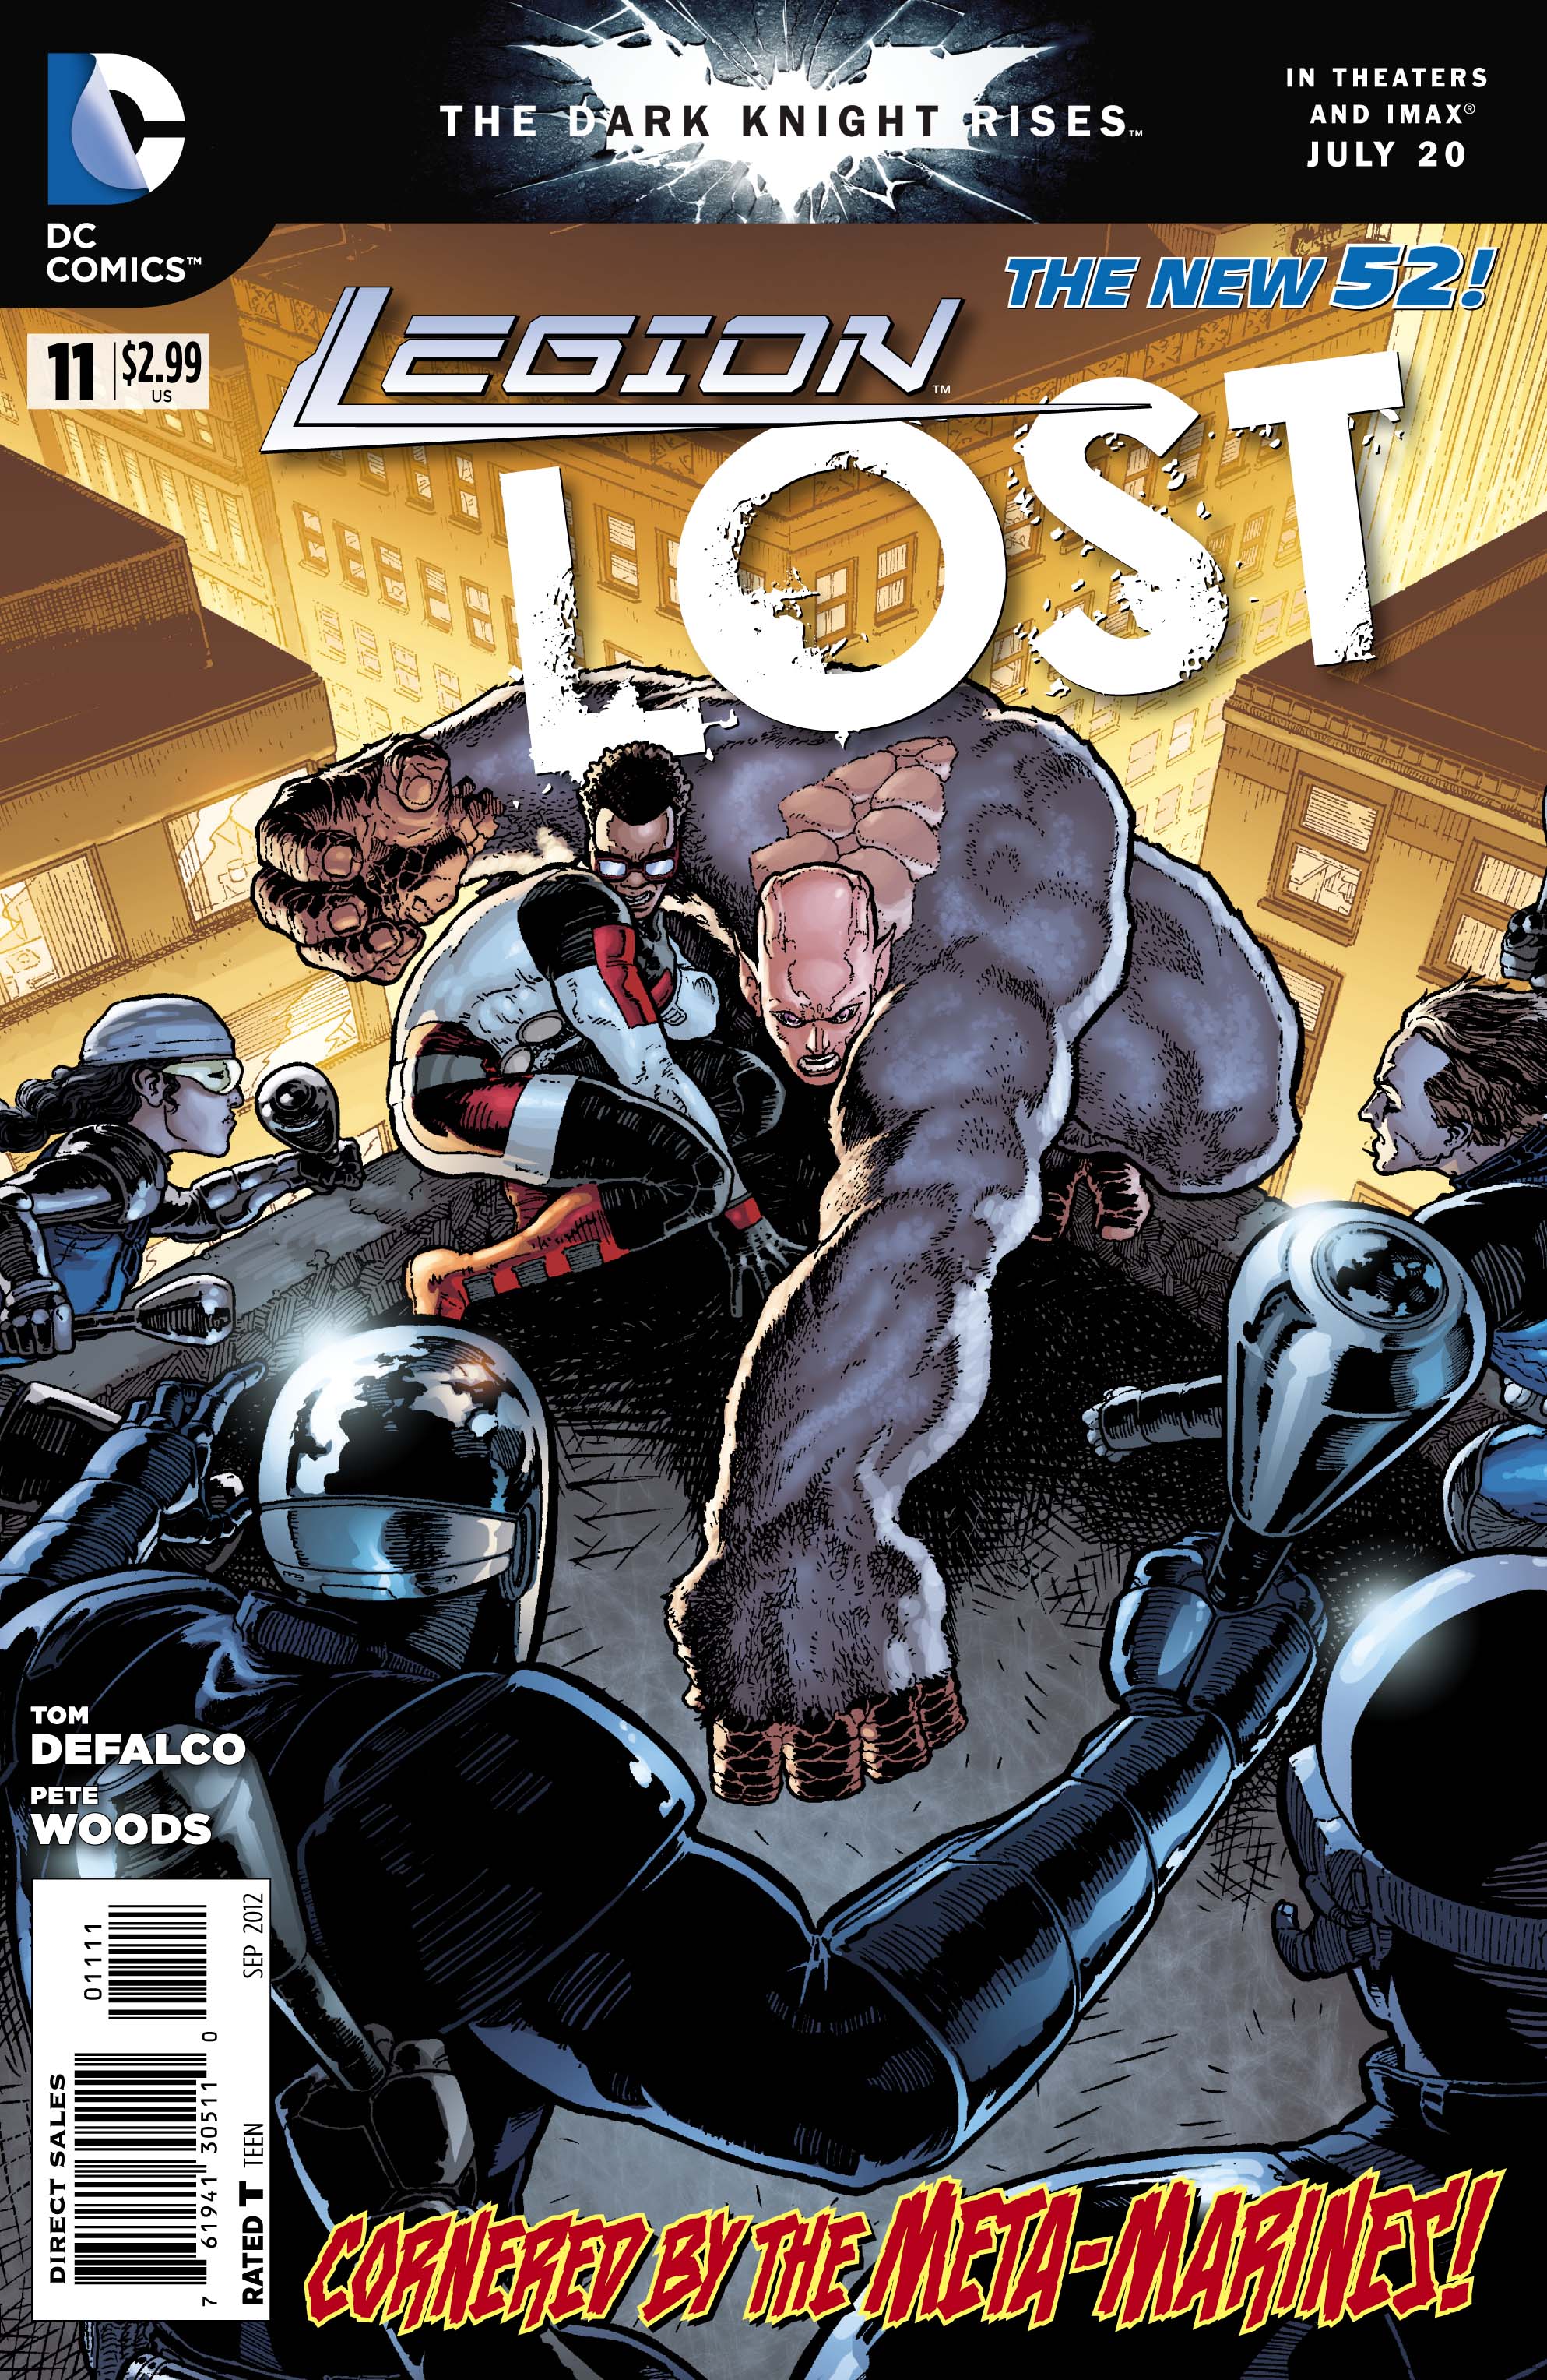 Legion Lost #10